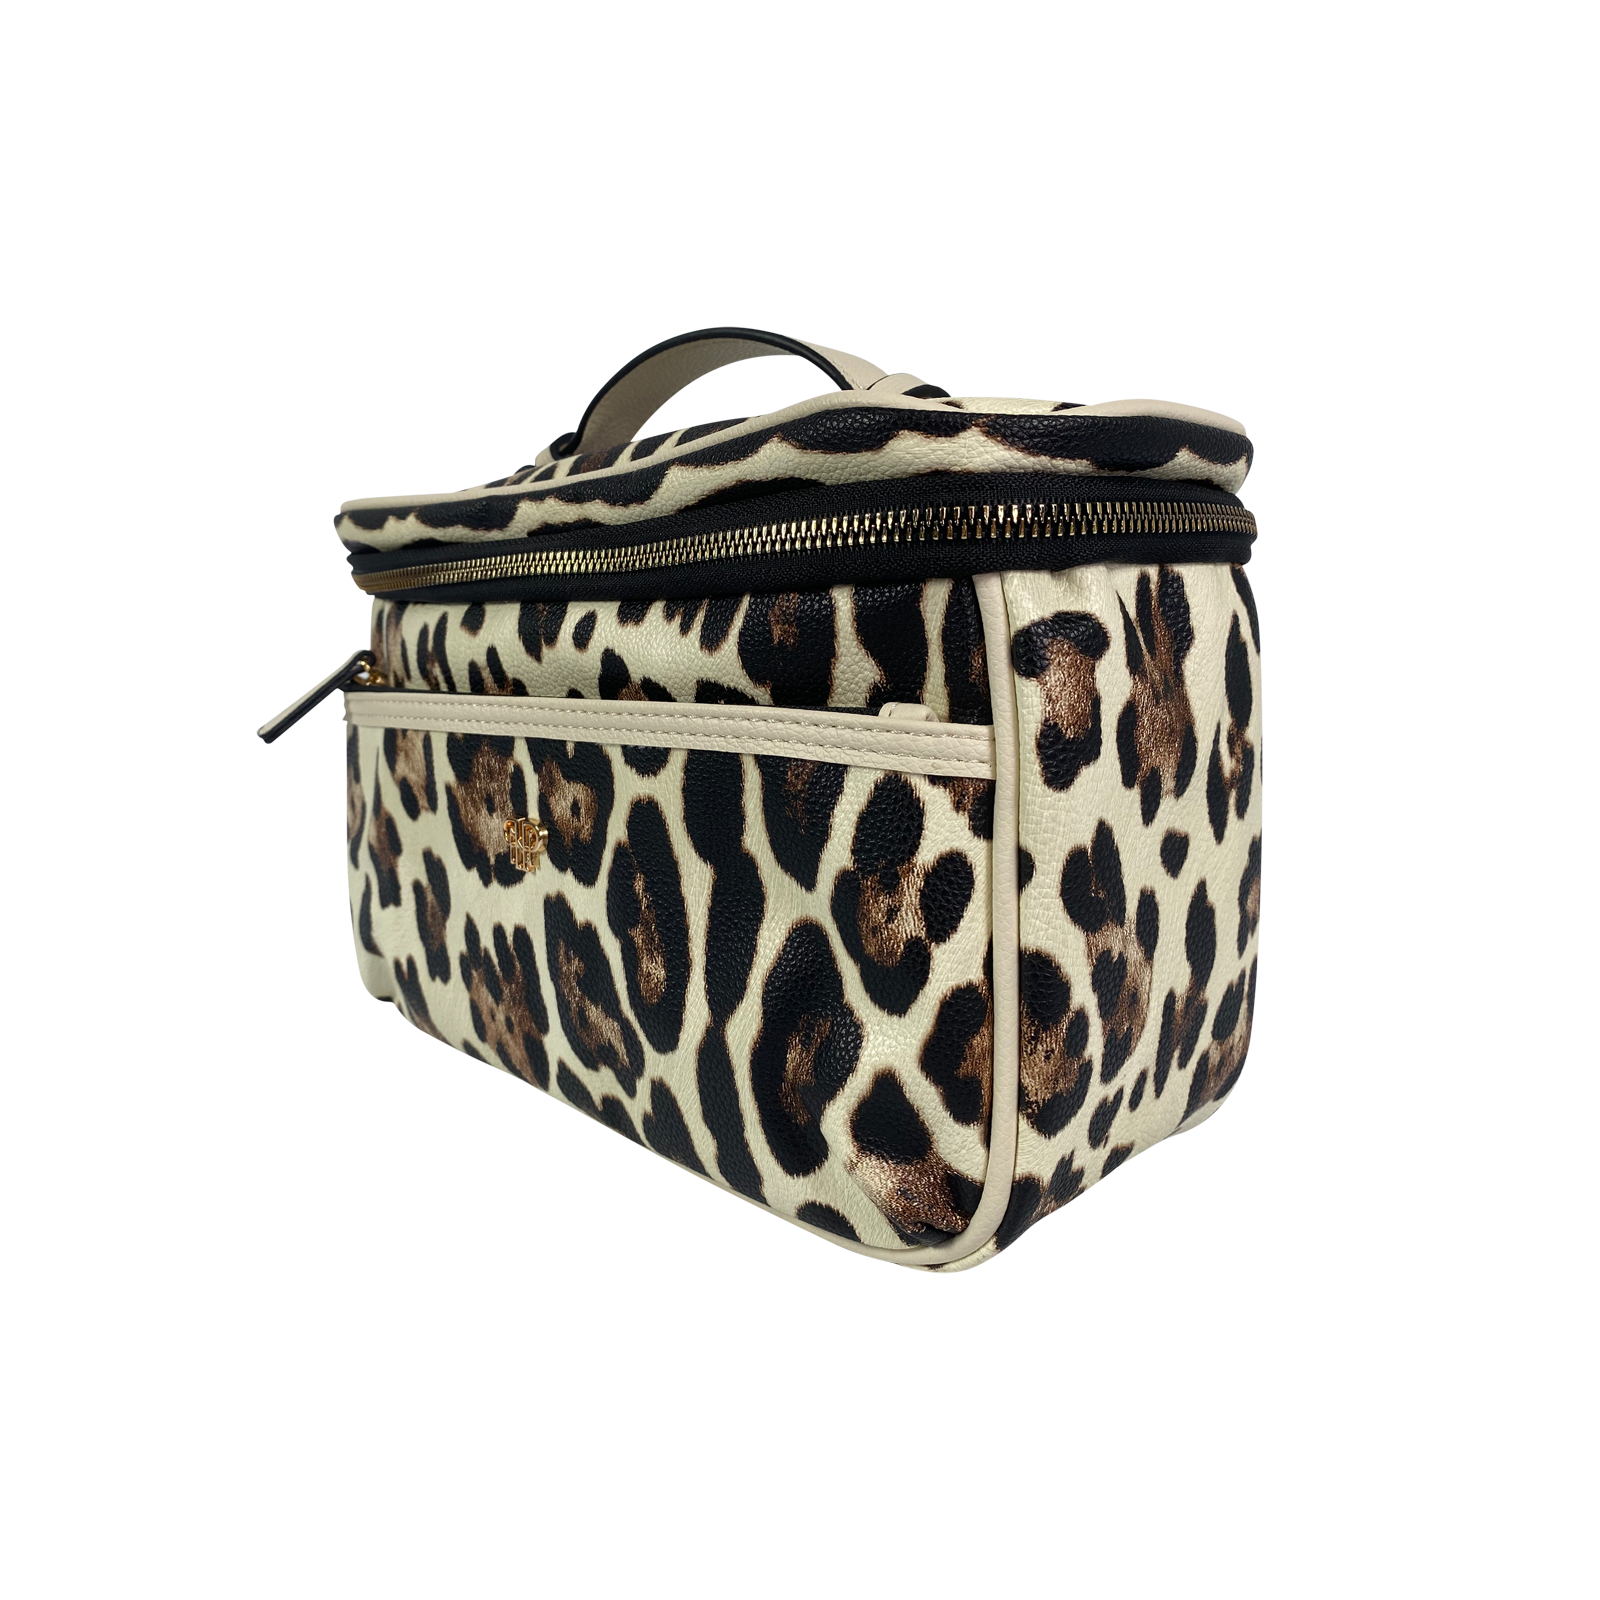 Pursen Heat Resistant Travel Case 4 Hair Styling Tools & More - Cream Leopard